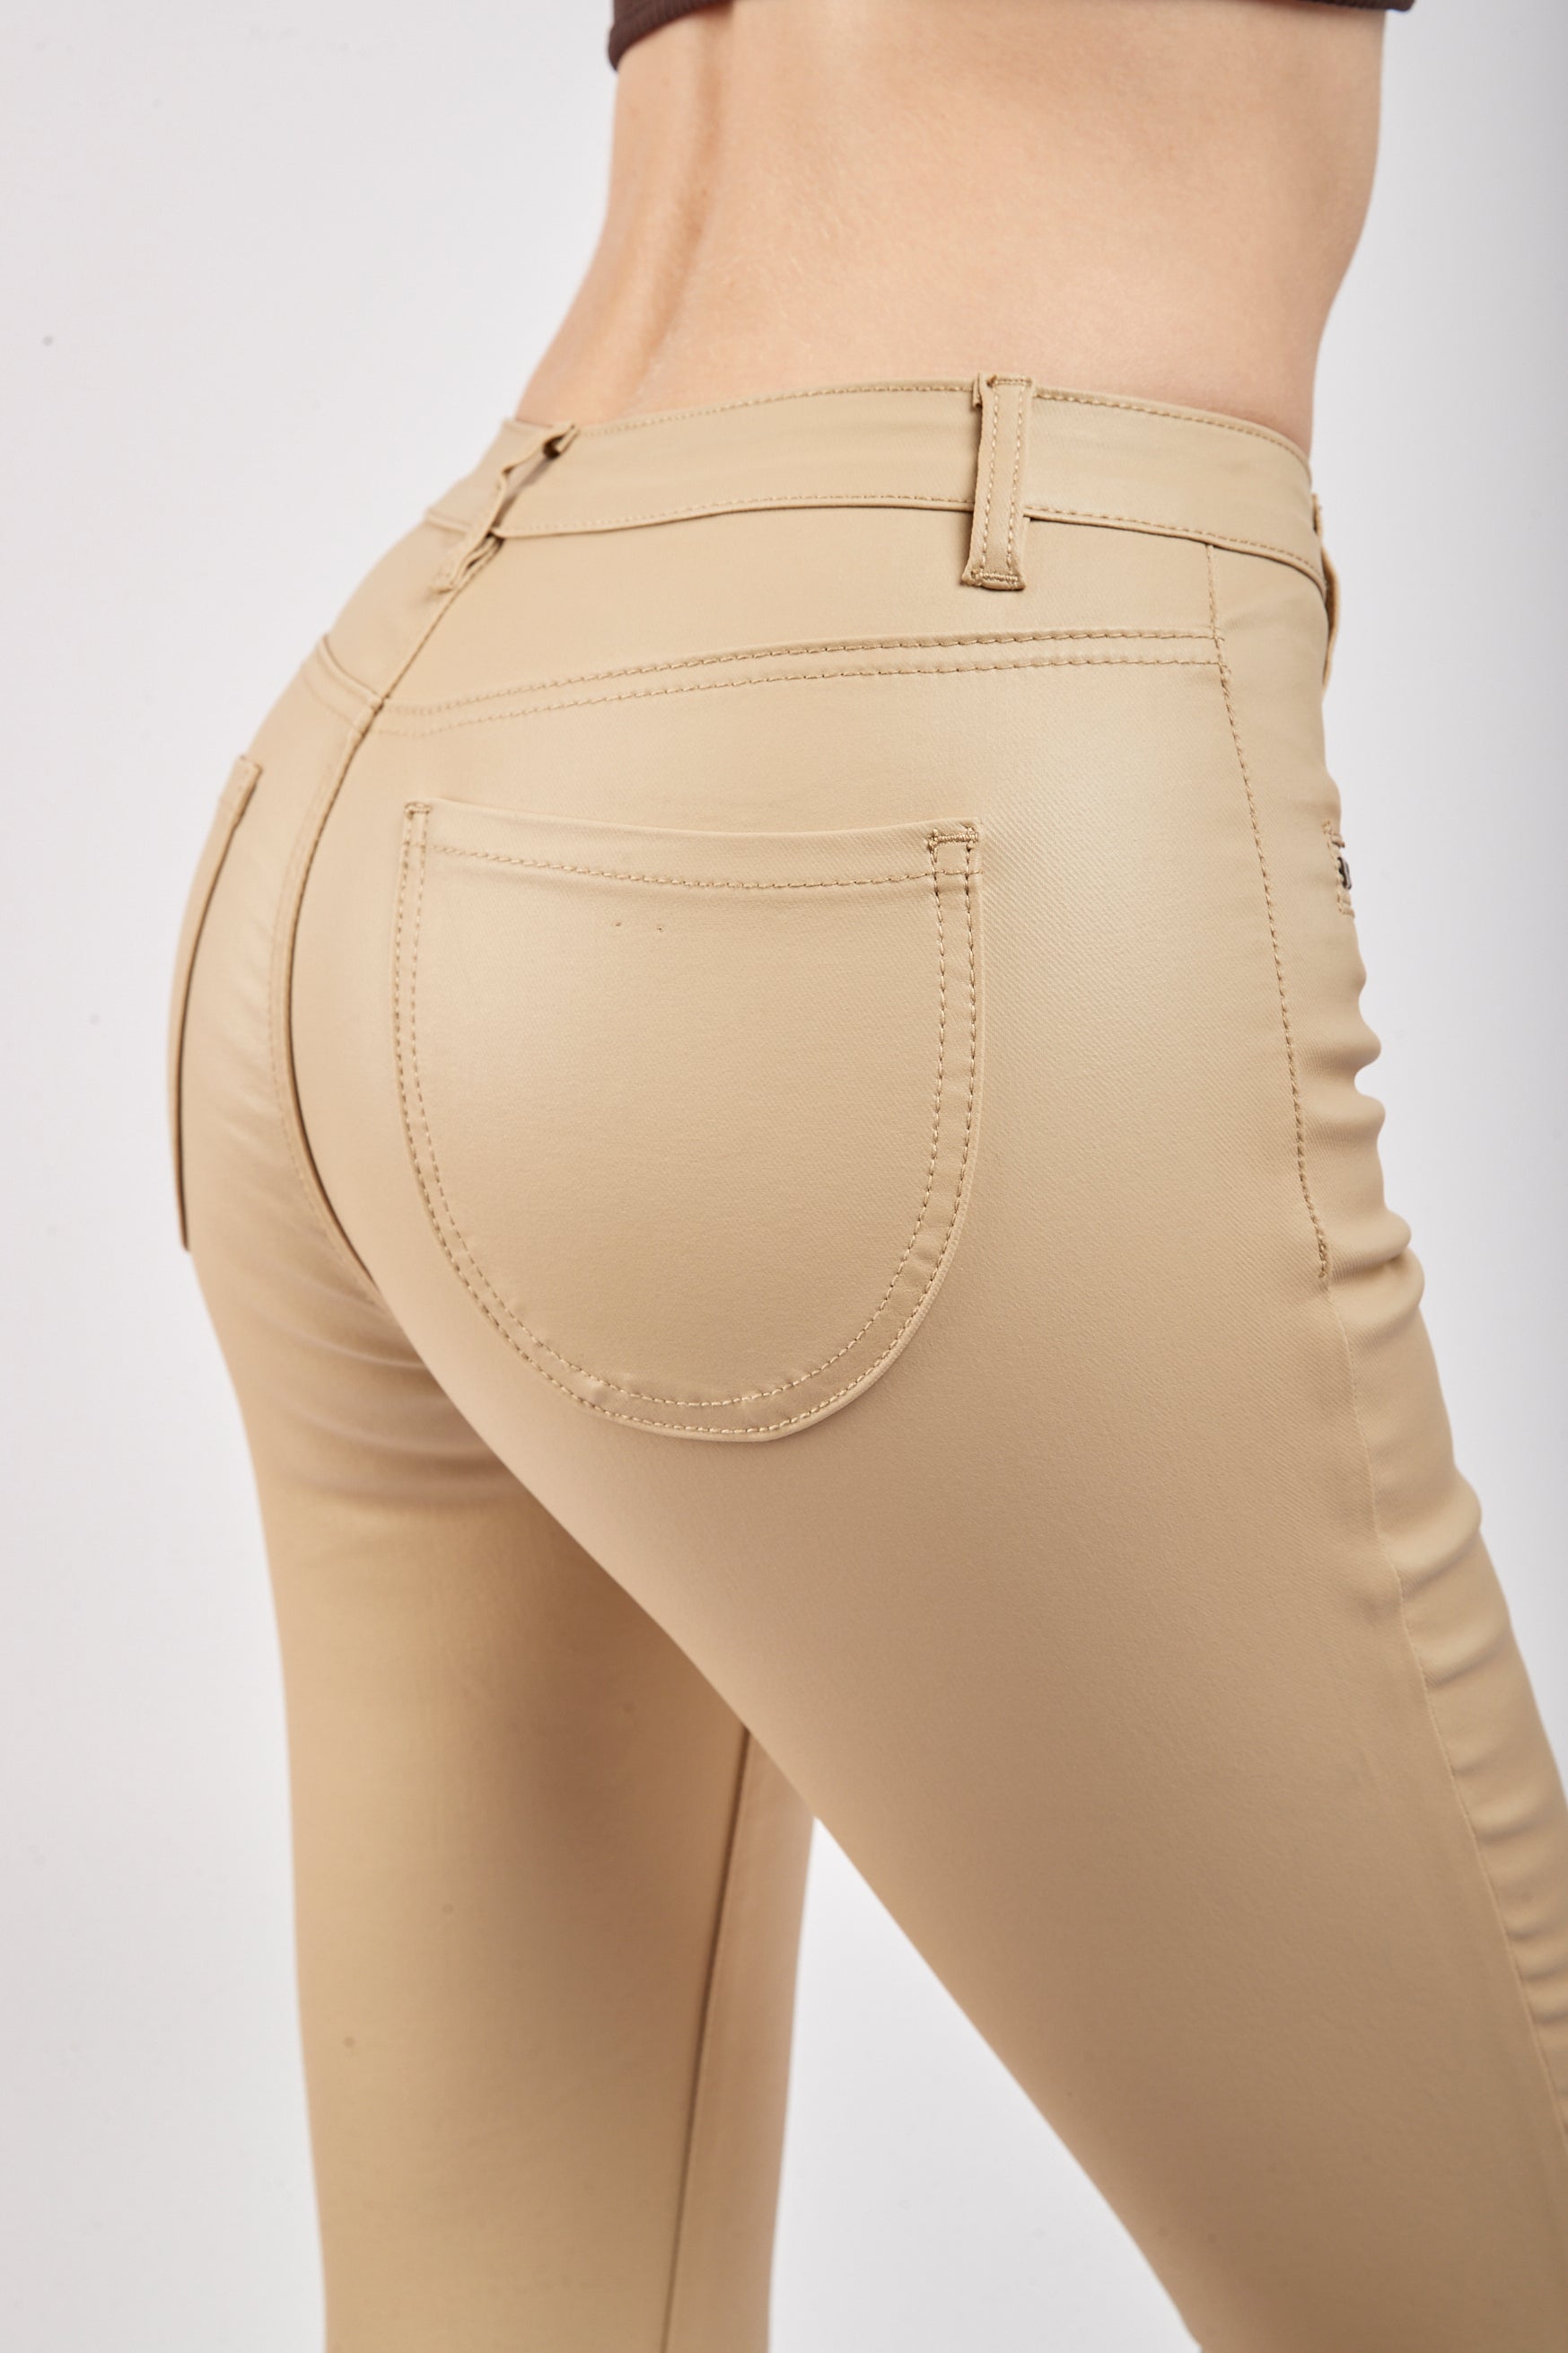 Slim pants imitation leather zipped pocket - zouna